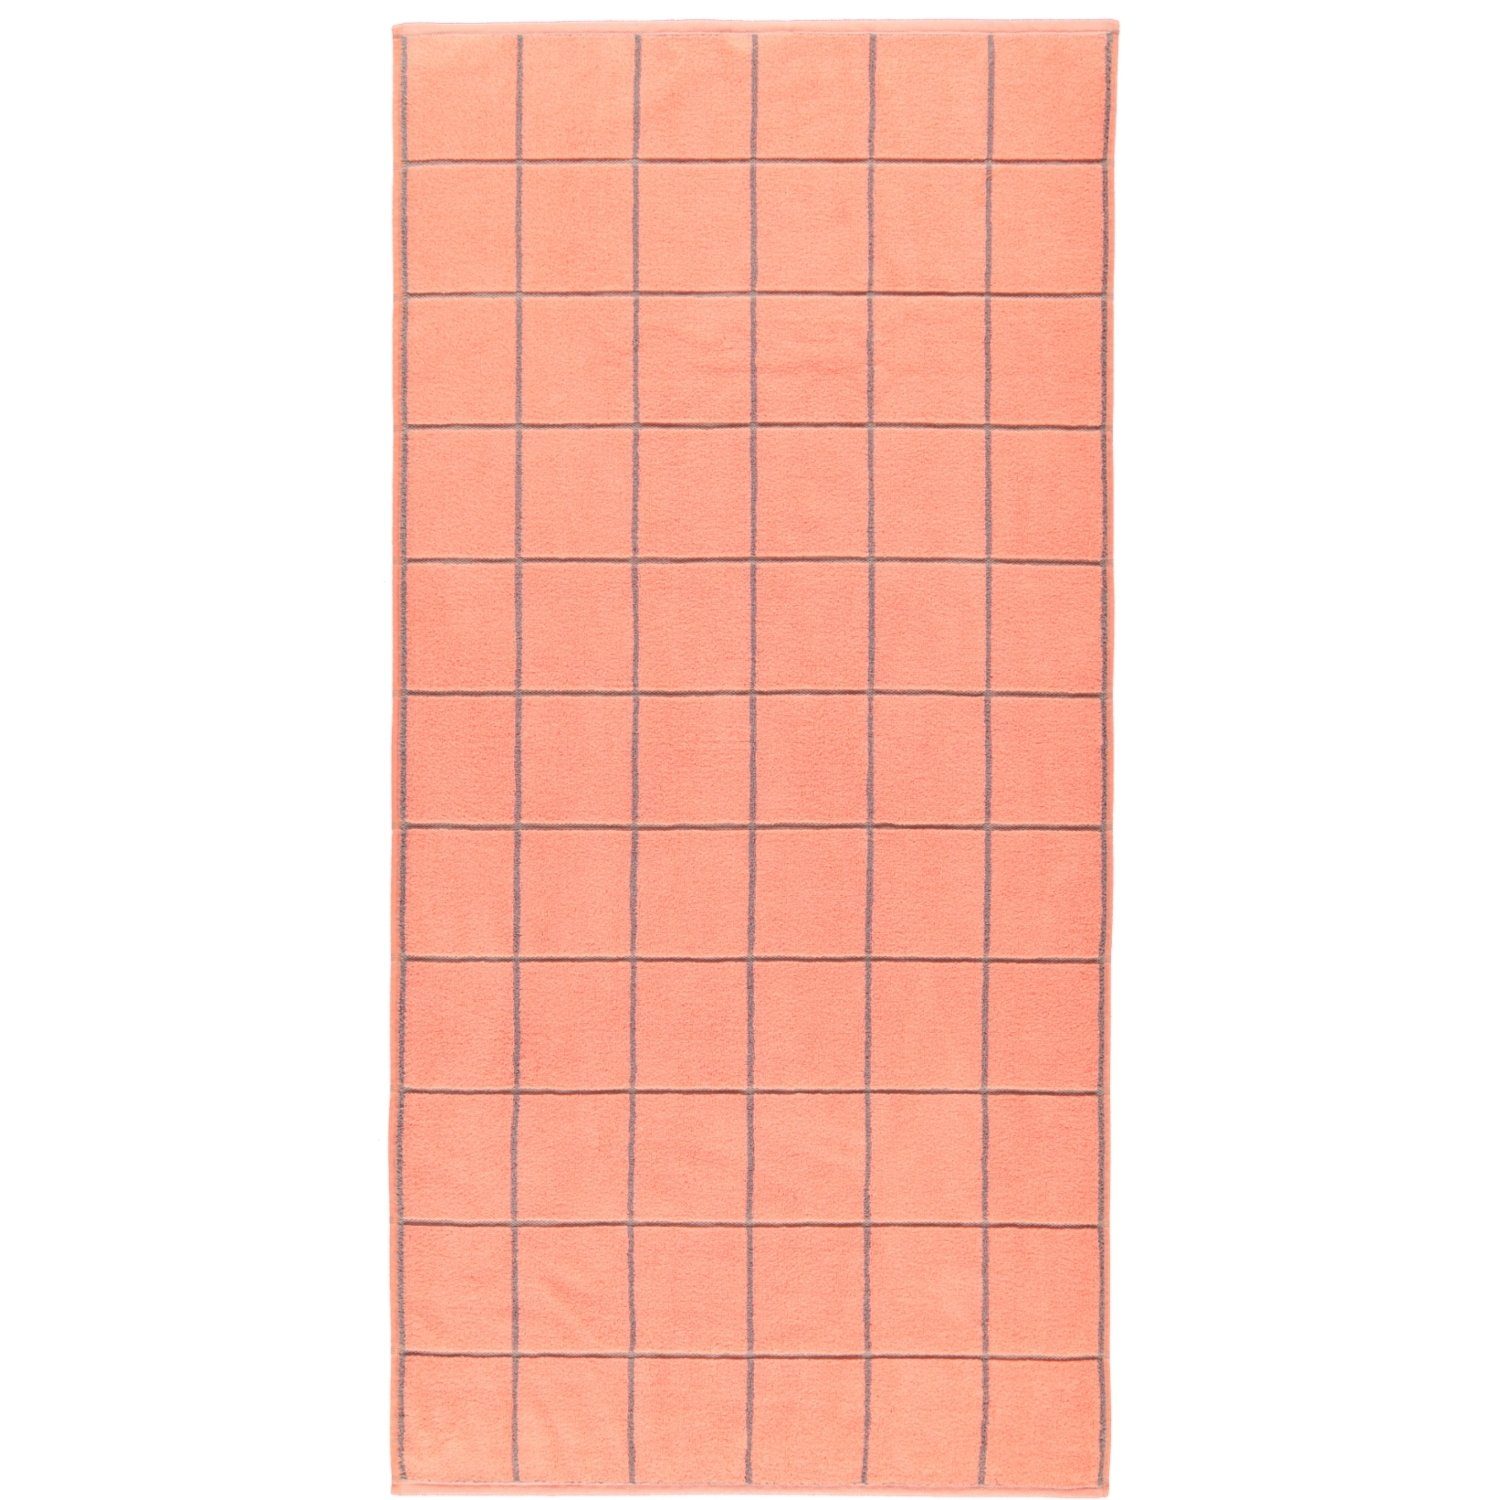 ROSS Handtücher Überkaro 9032, 100% Baumwolle peach pink